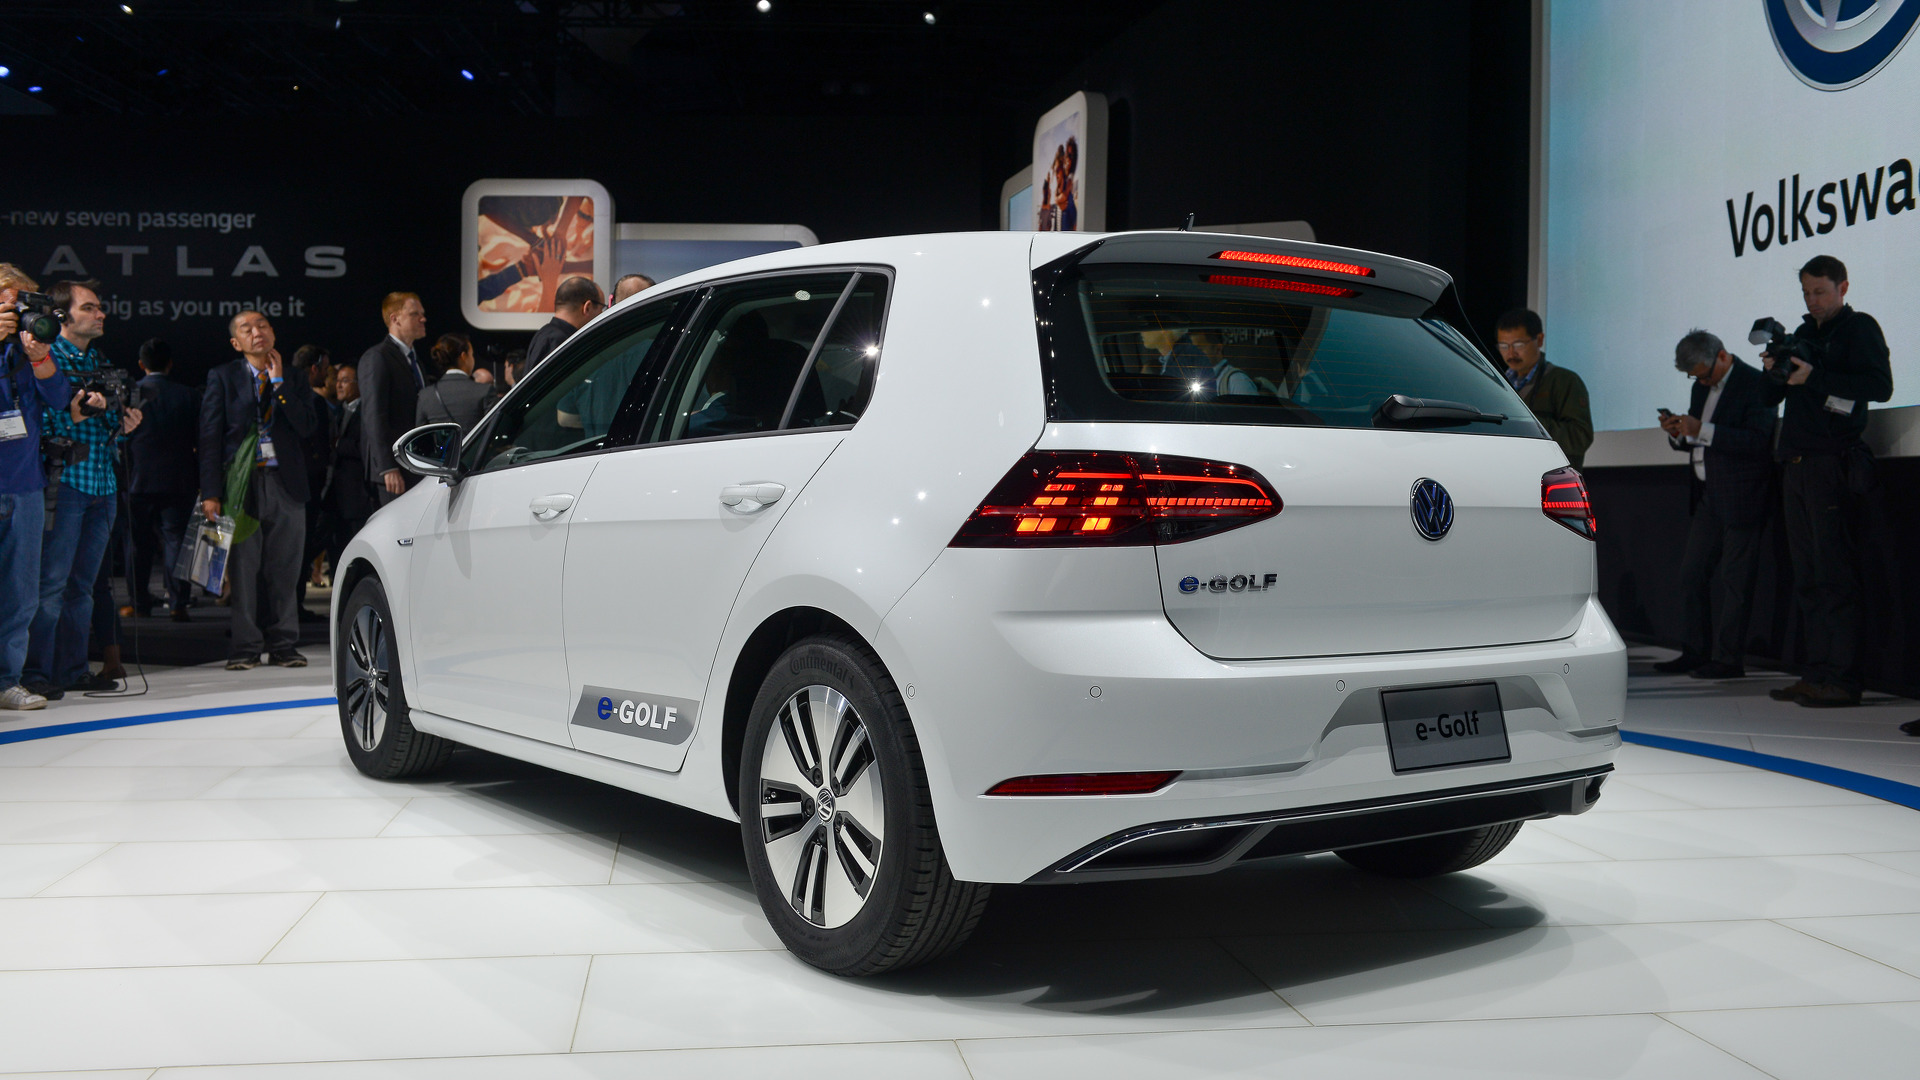 Volkswagen e-Golf News and Reviews | InsideEVs